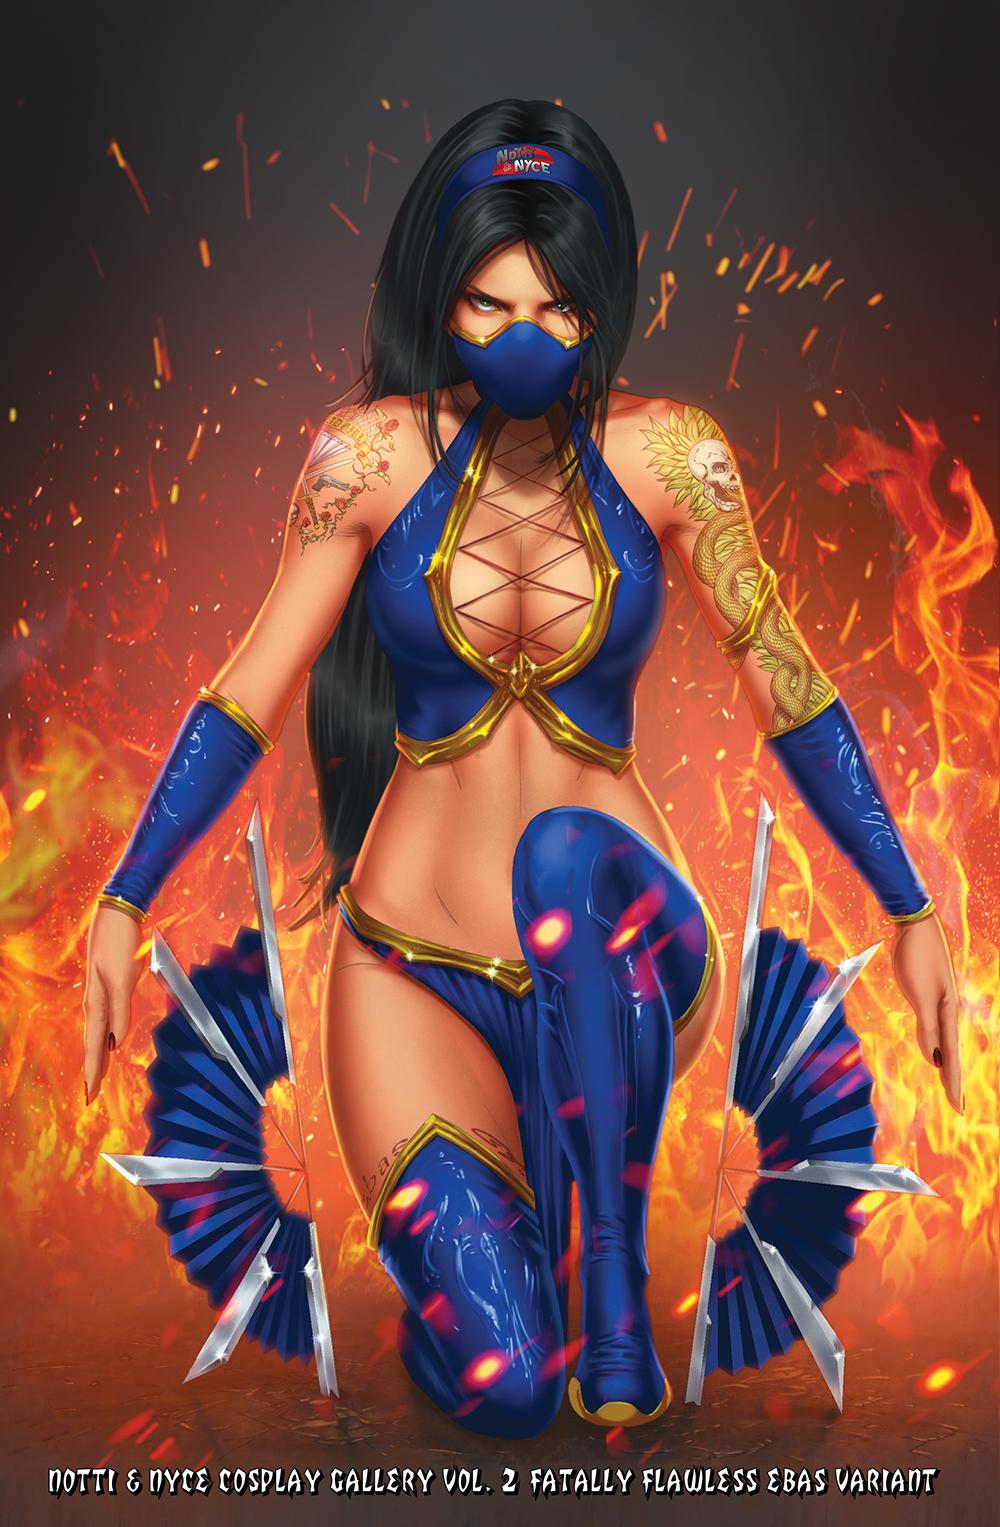 Notti & Nyce Cosplay Gallery Vol. 2 Fatally Flawless Mortal Kombat Kitana Homage Variant Cover by EBAS